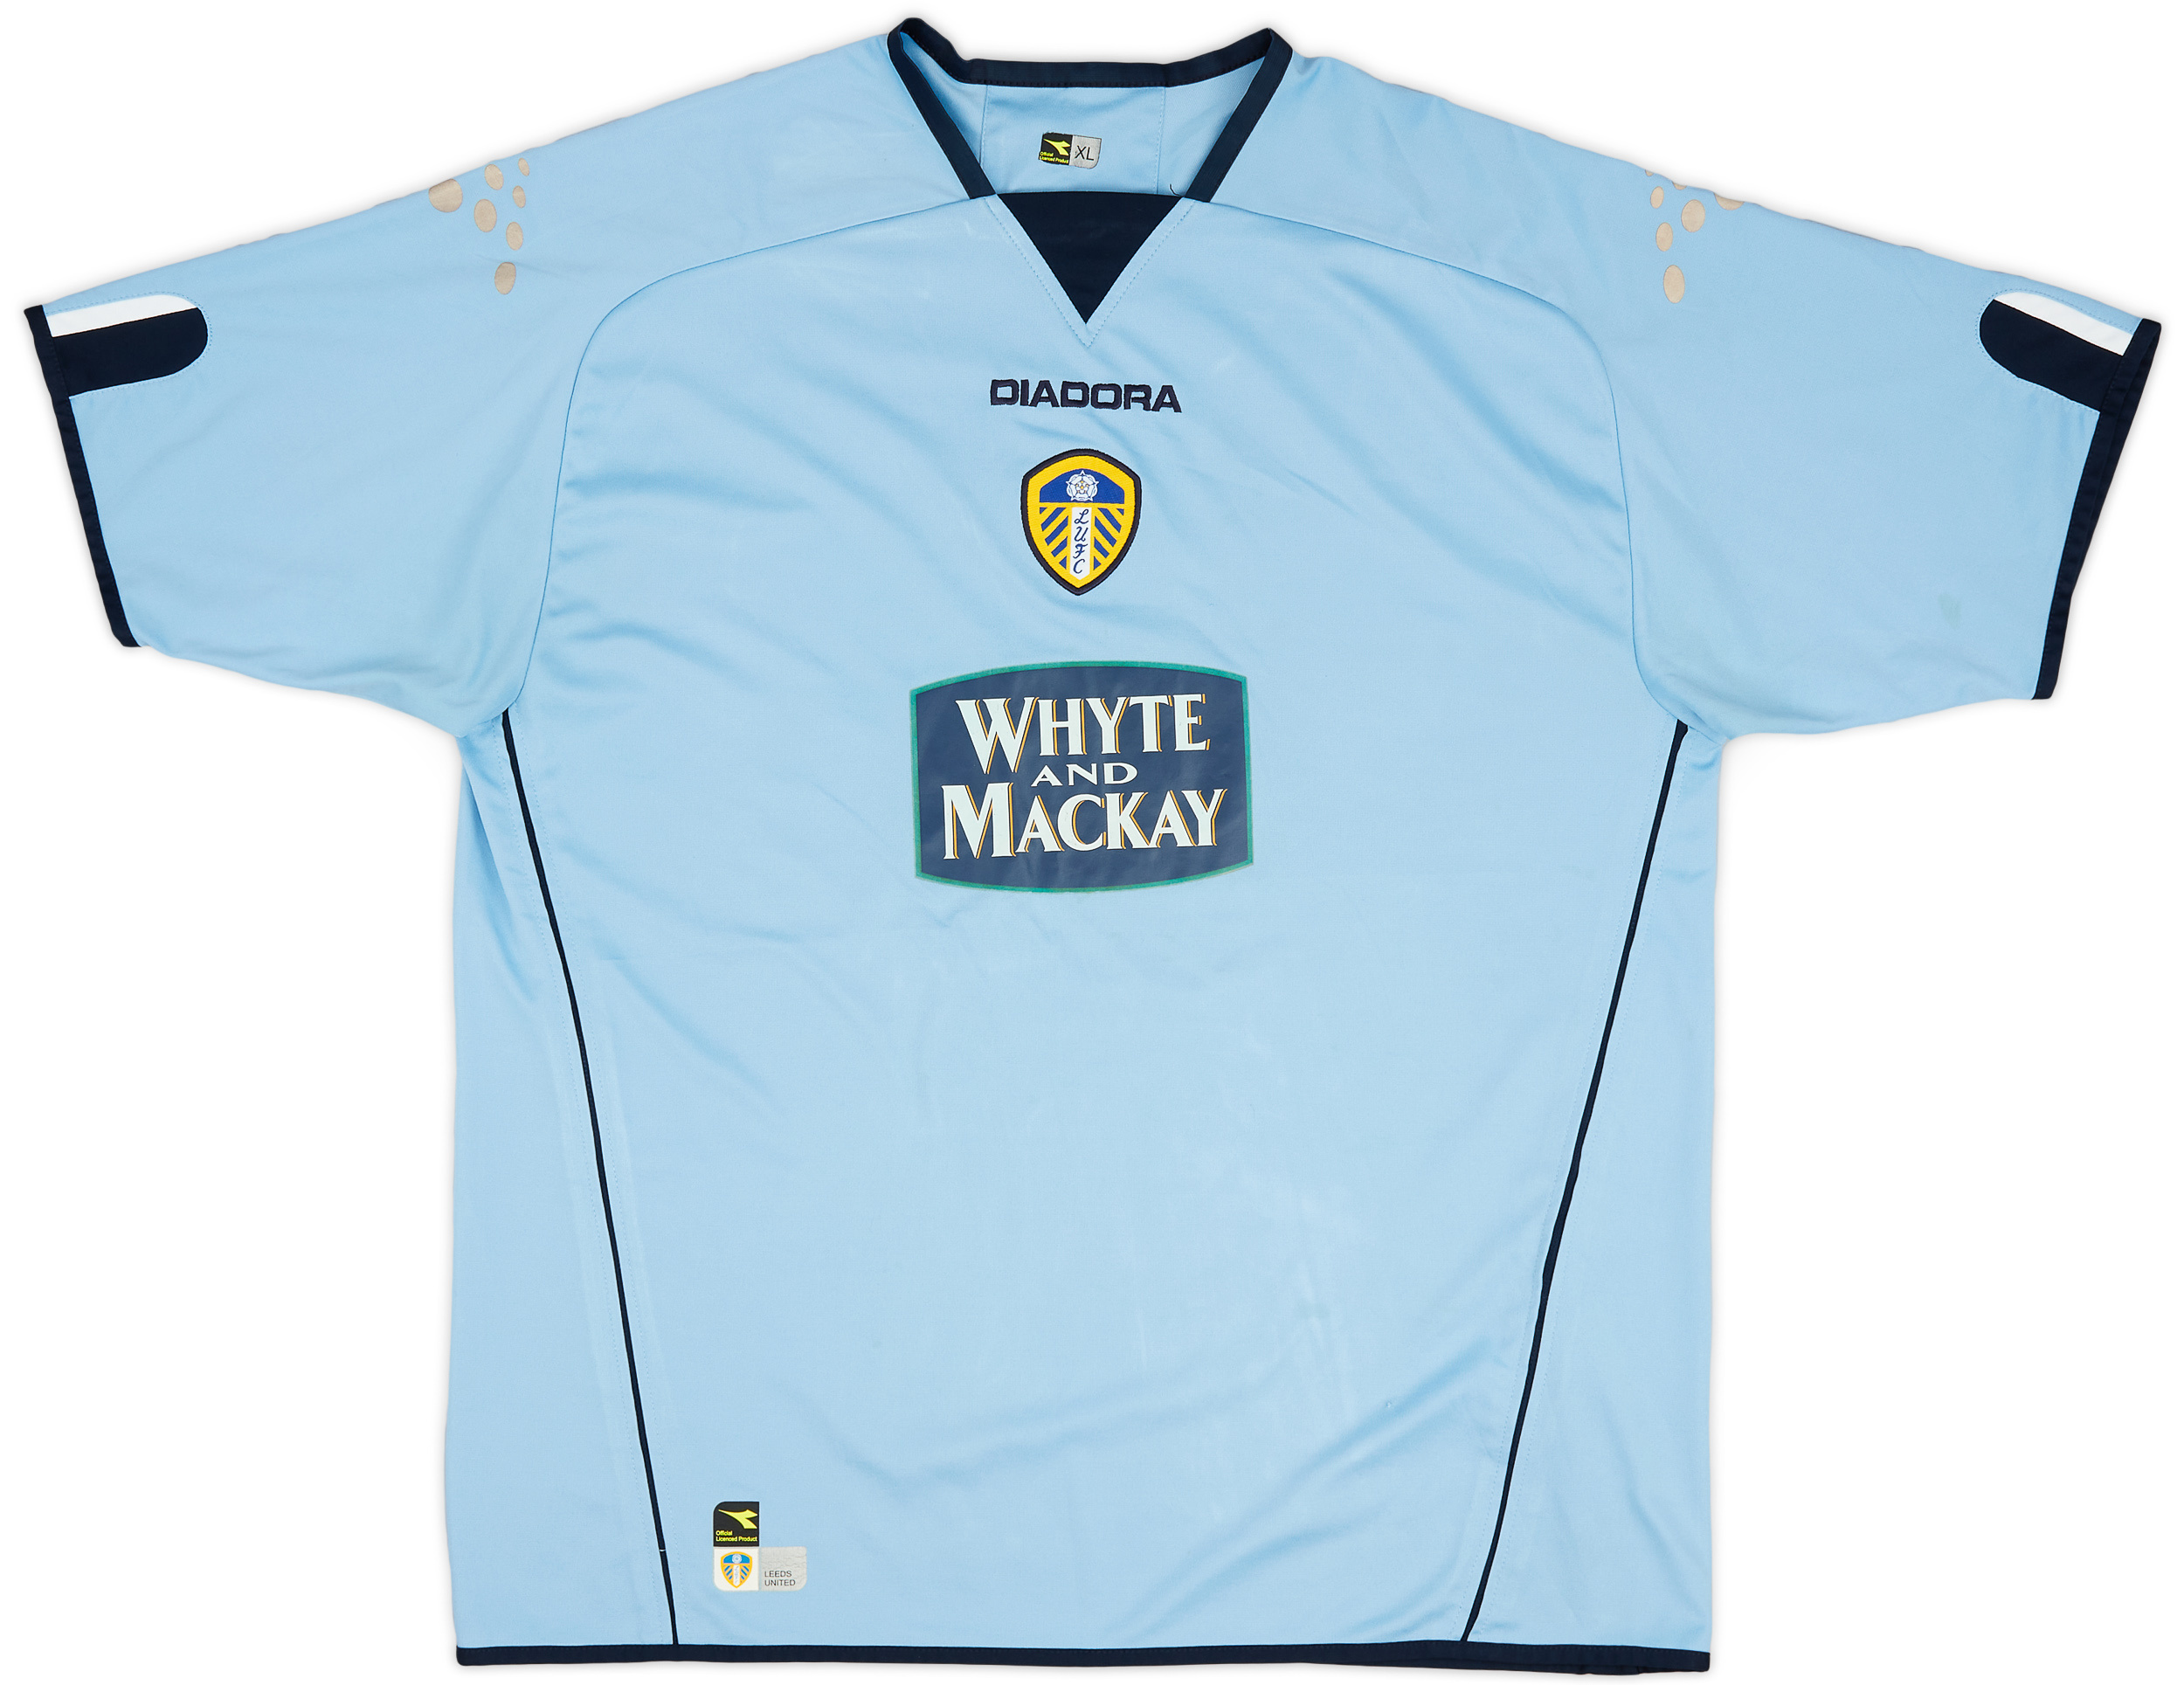 2004-05 Leeds United Away Shirt - 6/10 - ()